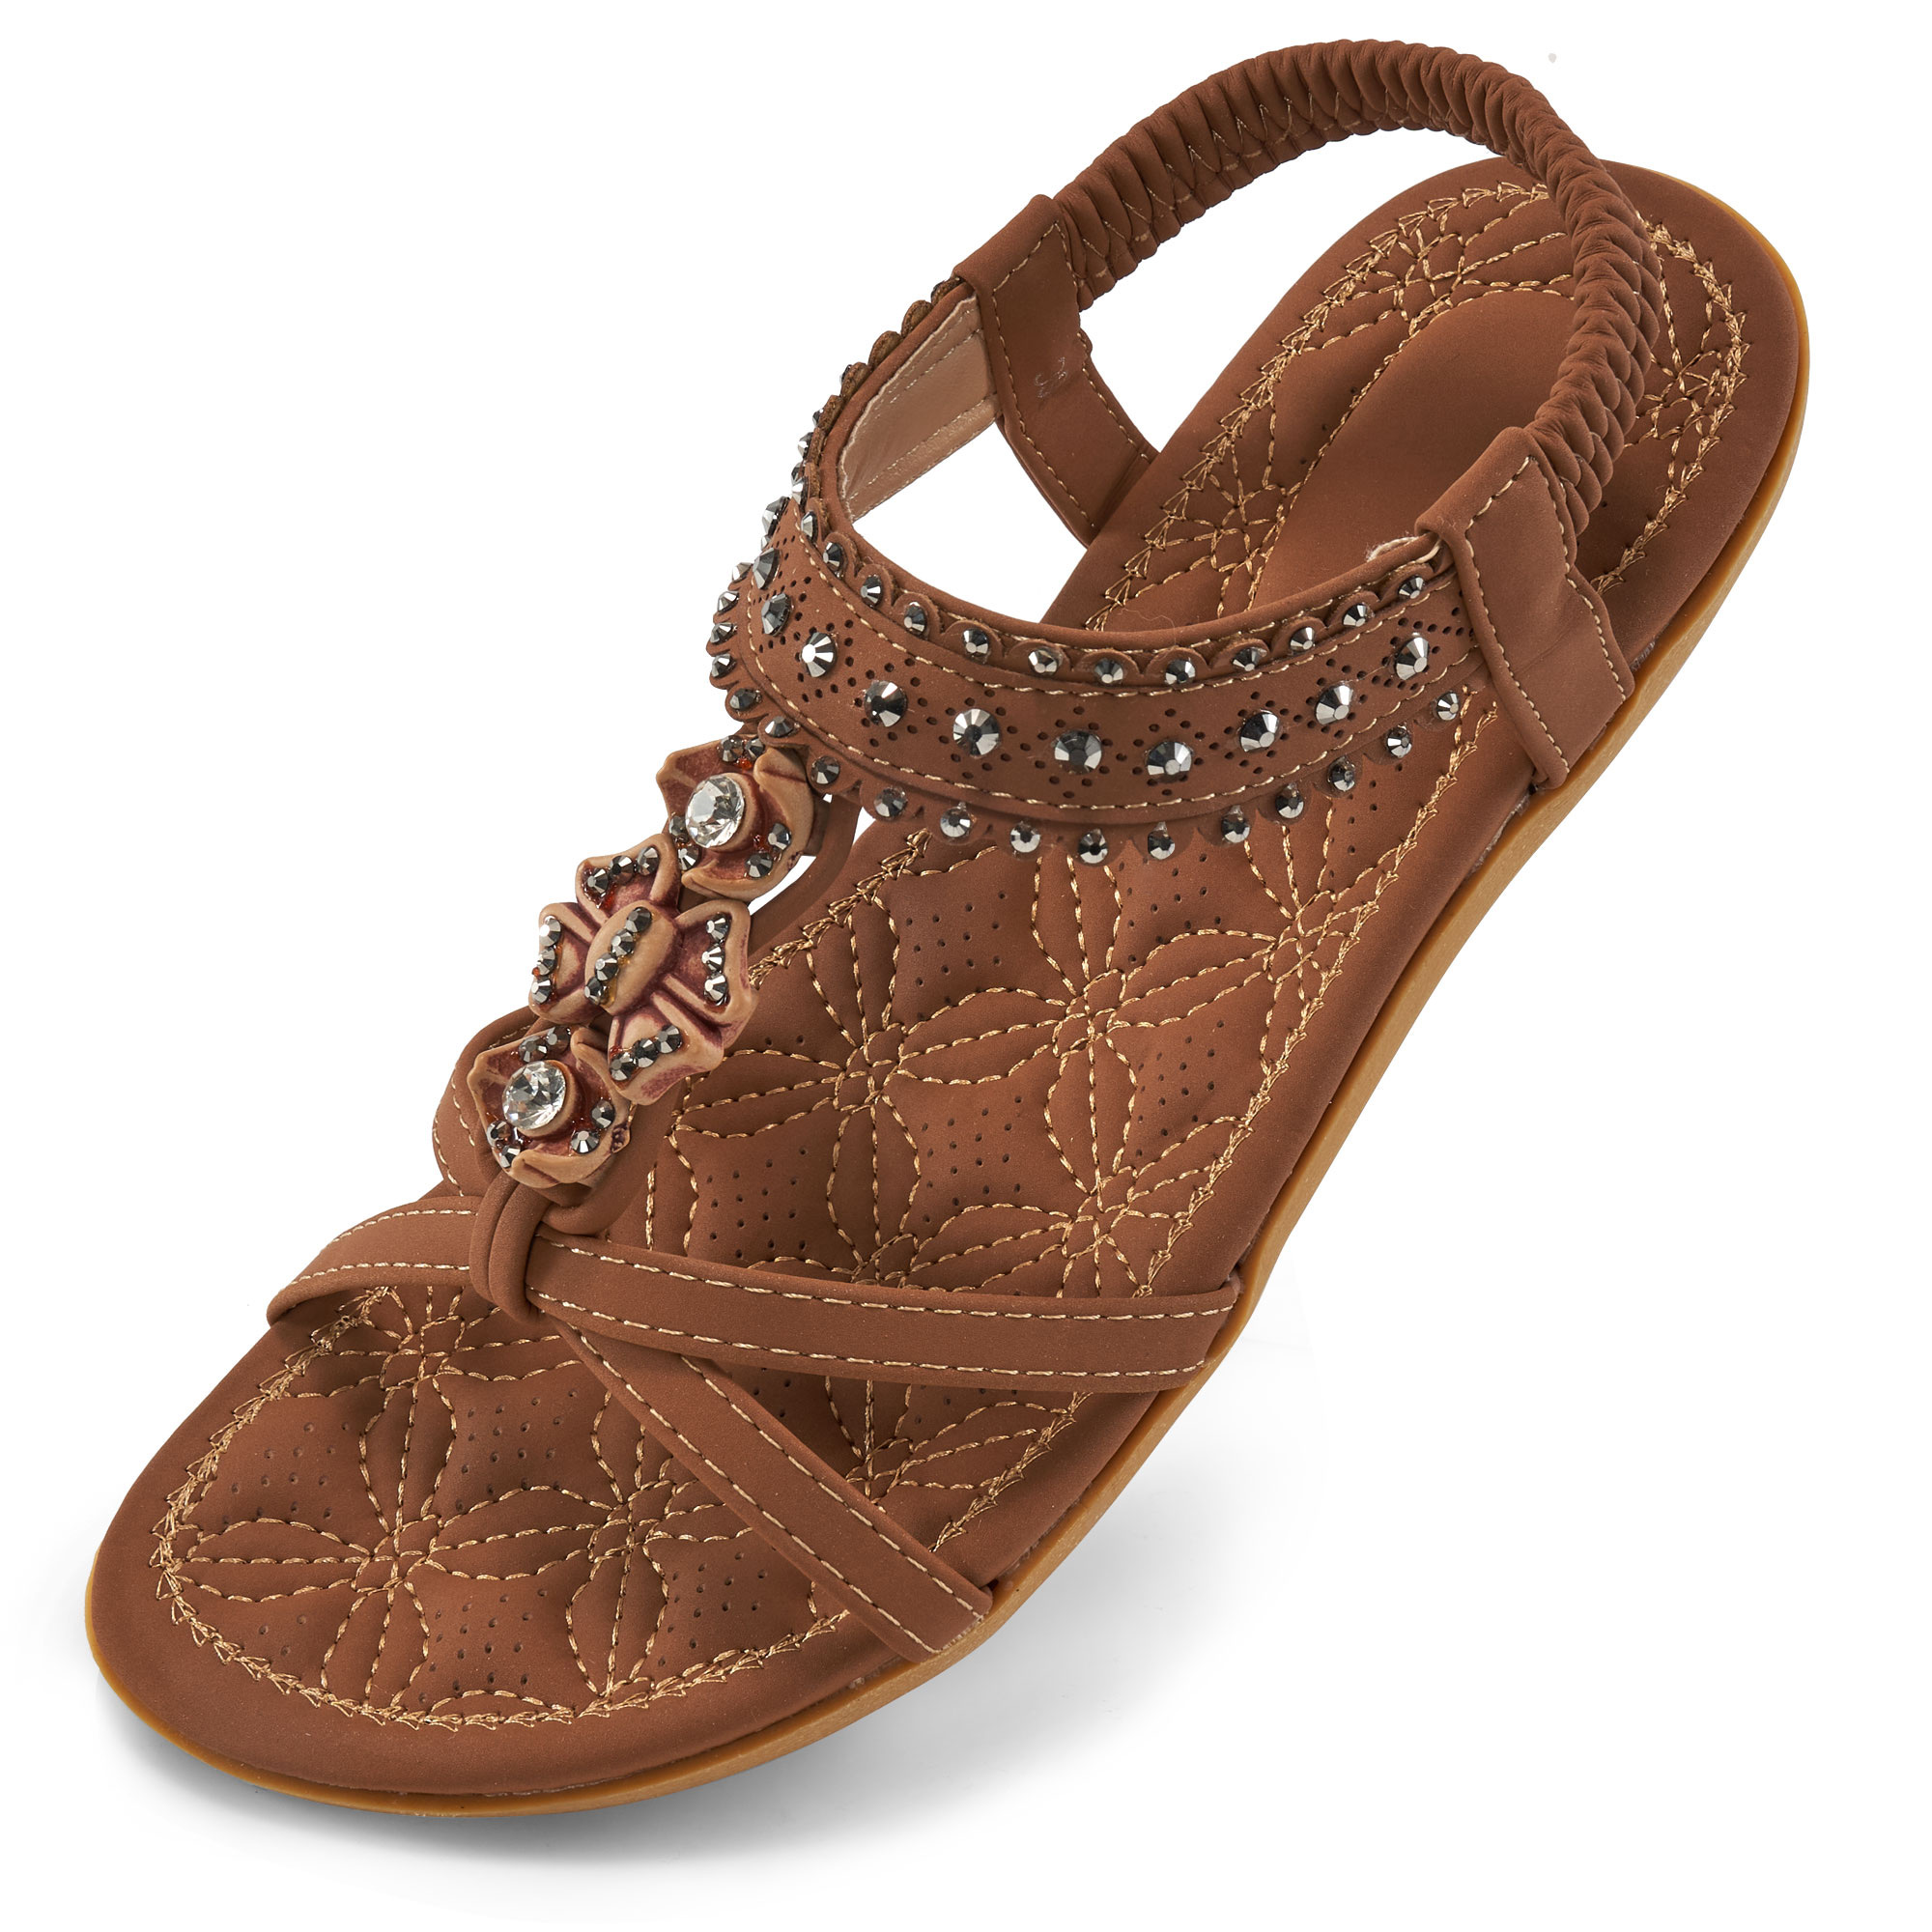 AOMPMSDX Sandals Women Comfortable Fashion Causal Singles Shoes Elastic ...